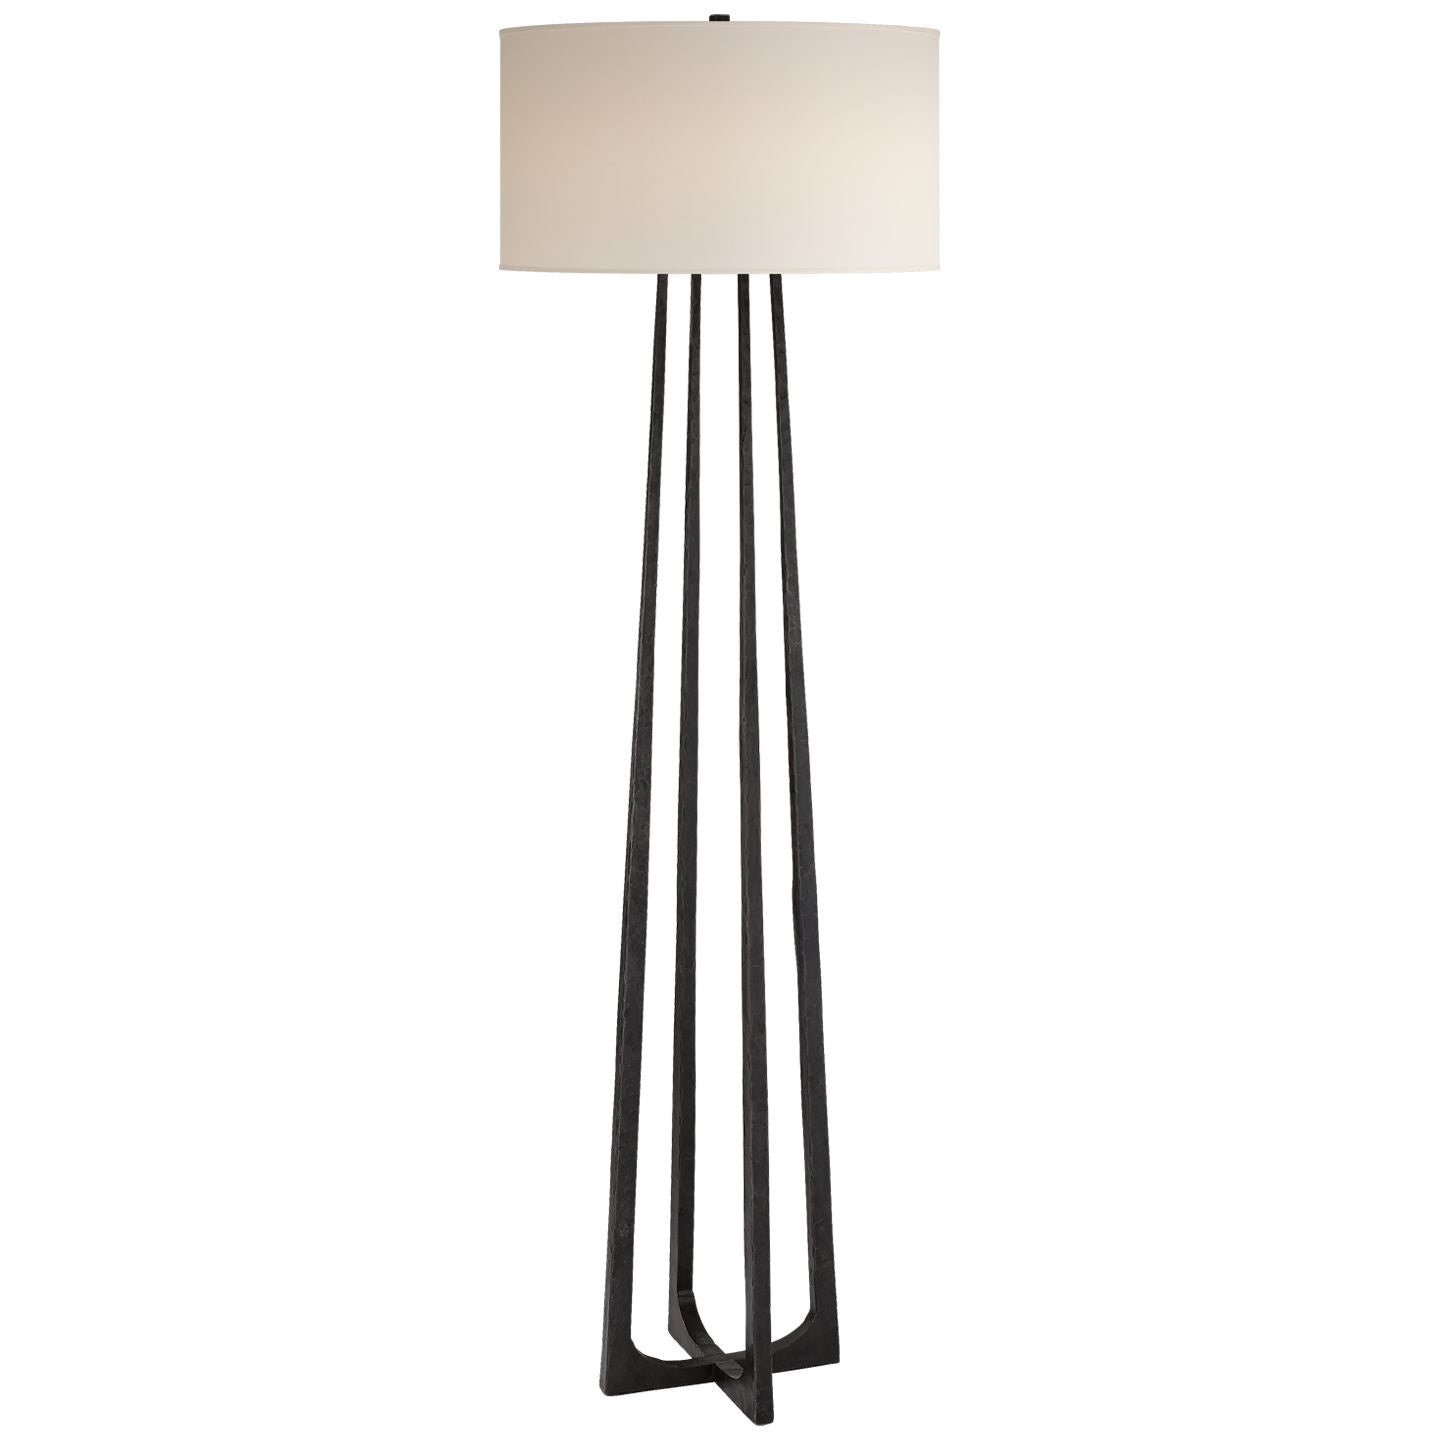 Visual Comfort Ian K. Fowler Scala Floor Lamp